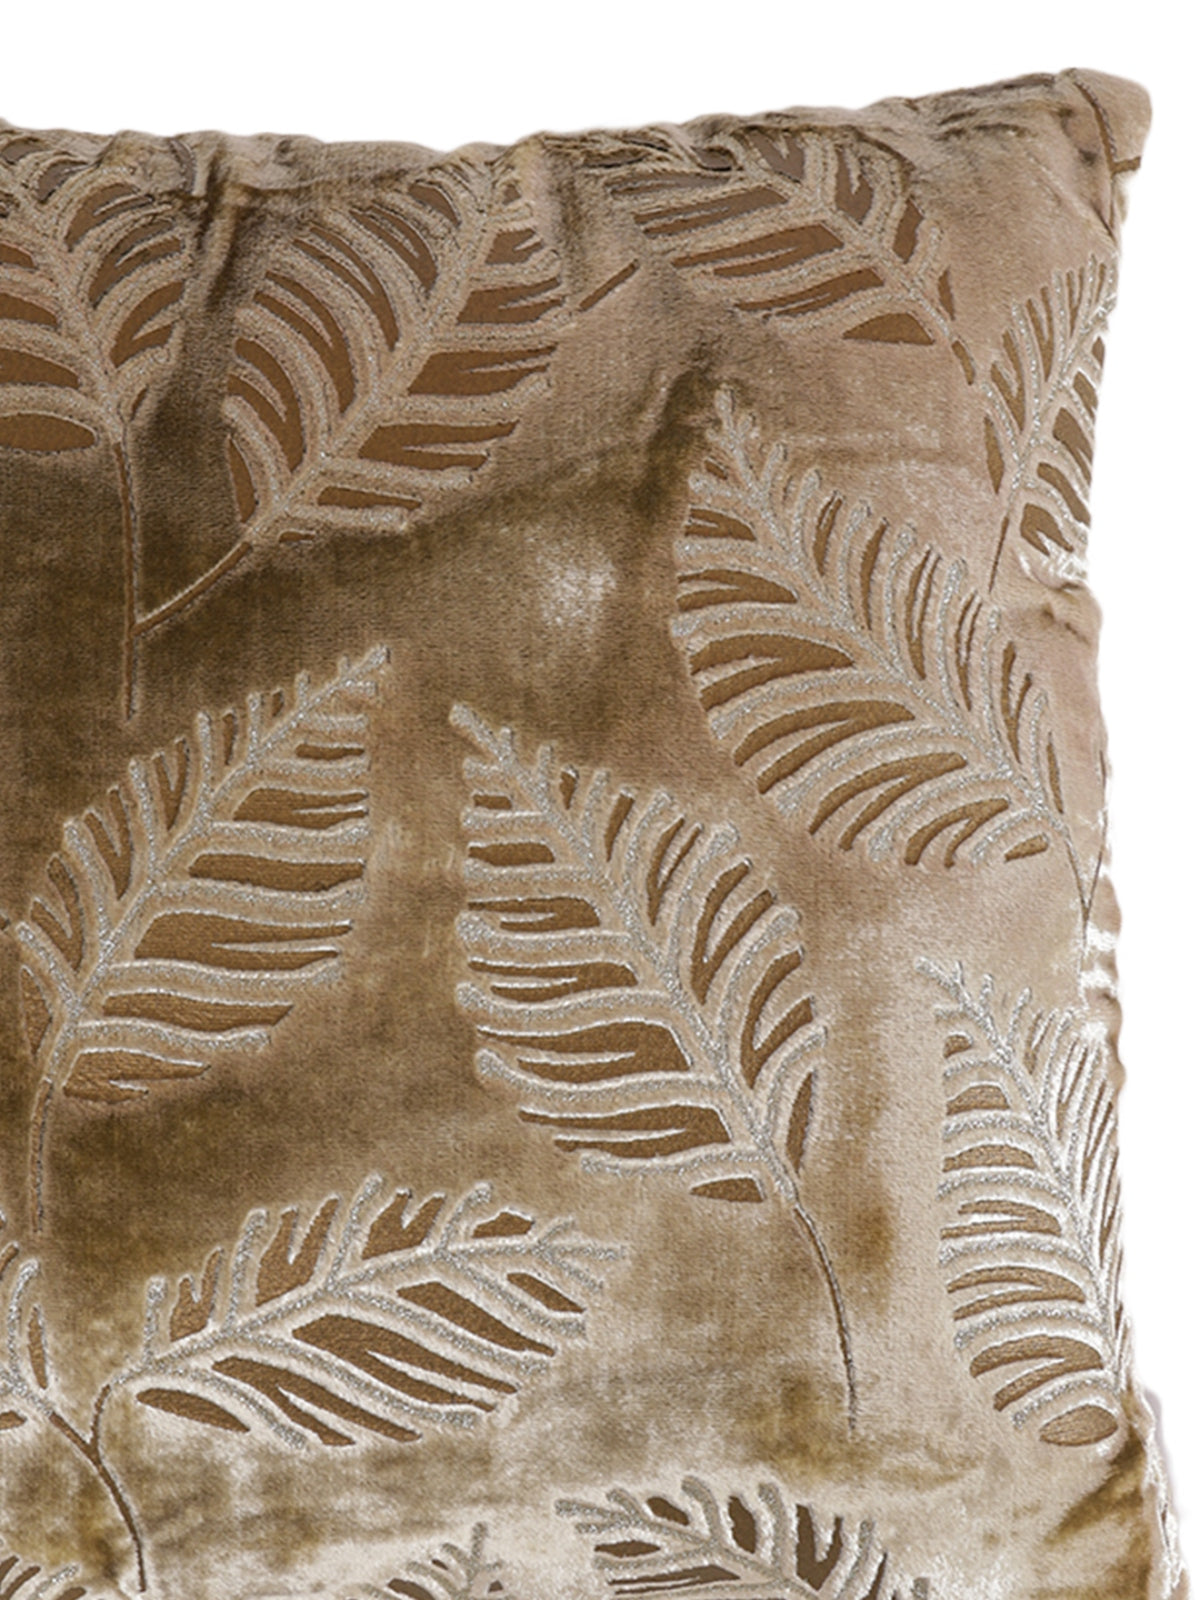 Velvet Leaf Designer Cushion Cover 16x16 Inche, Set of 5 - Beige